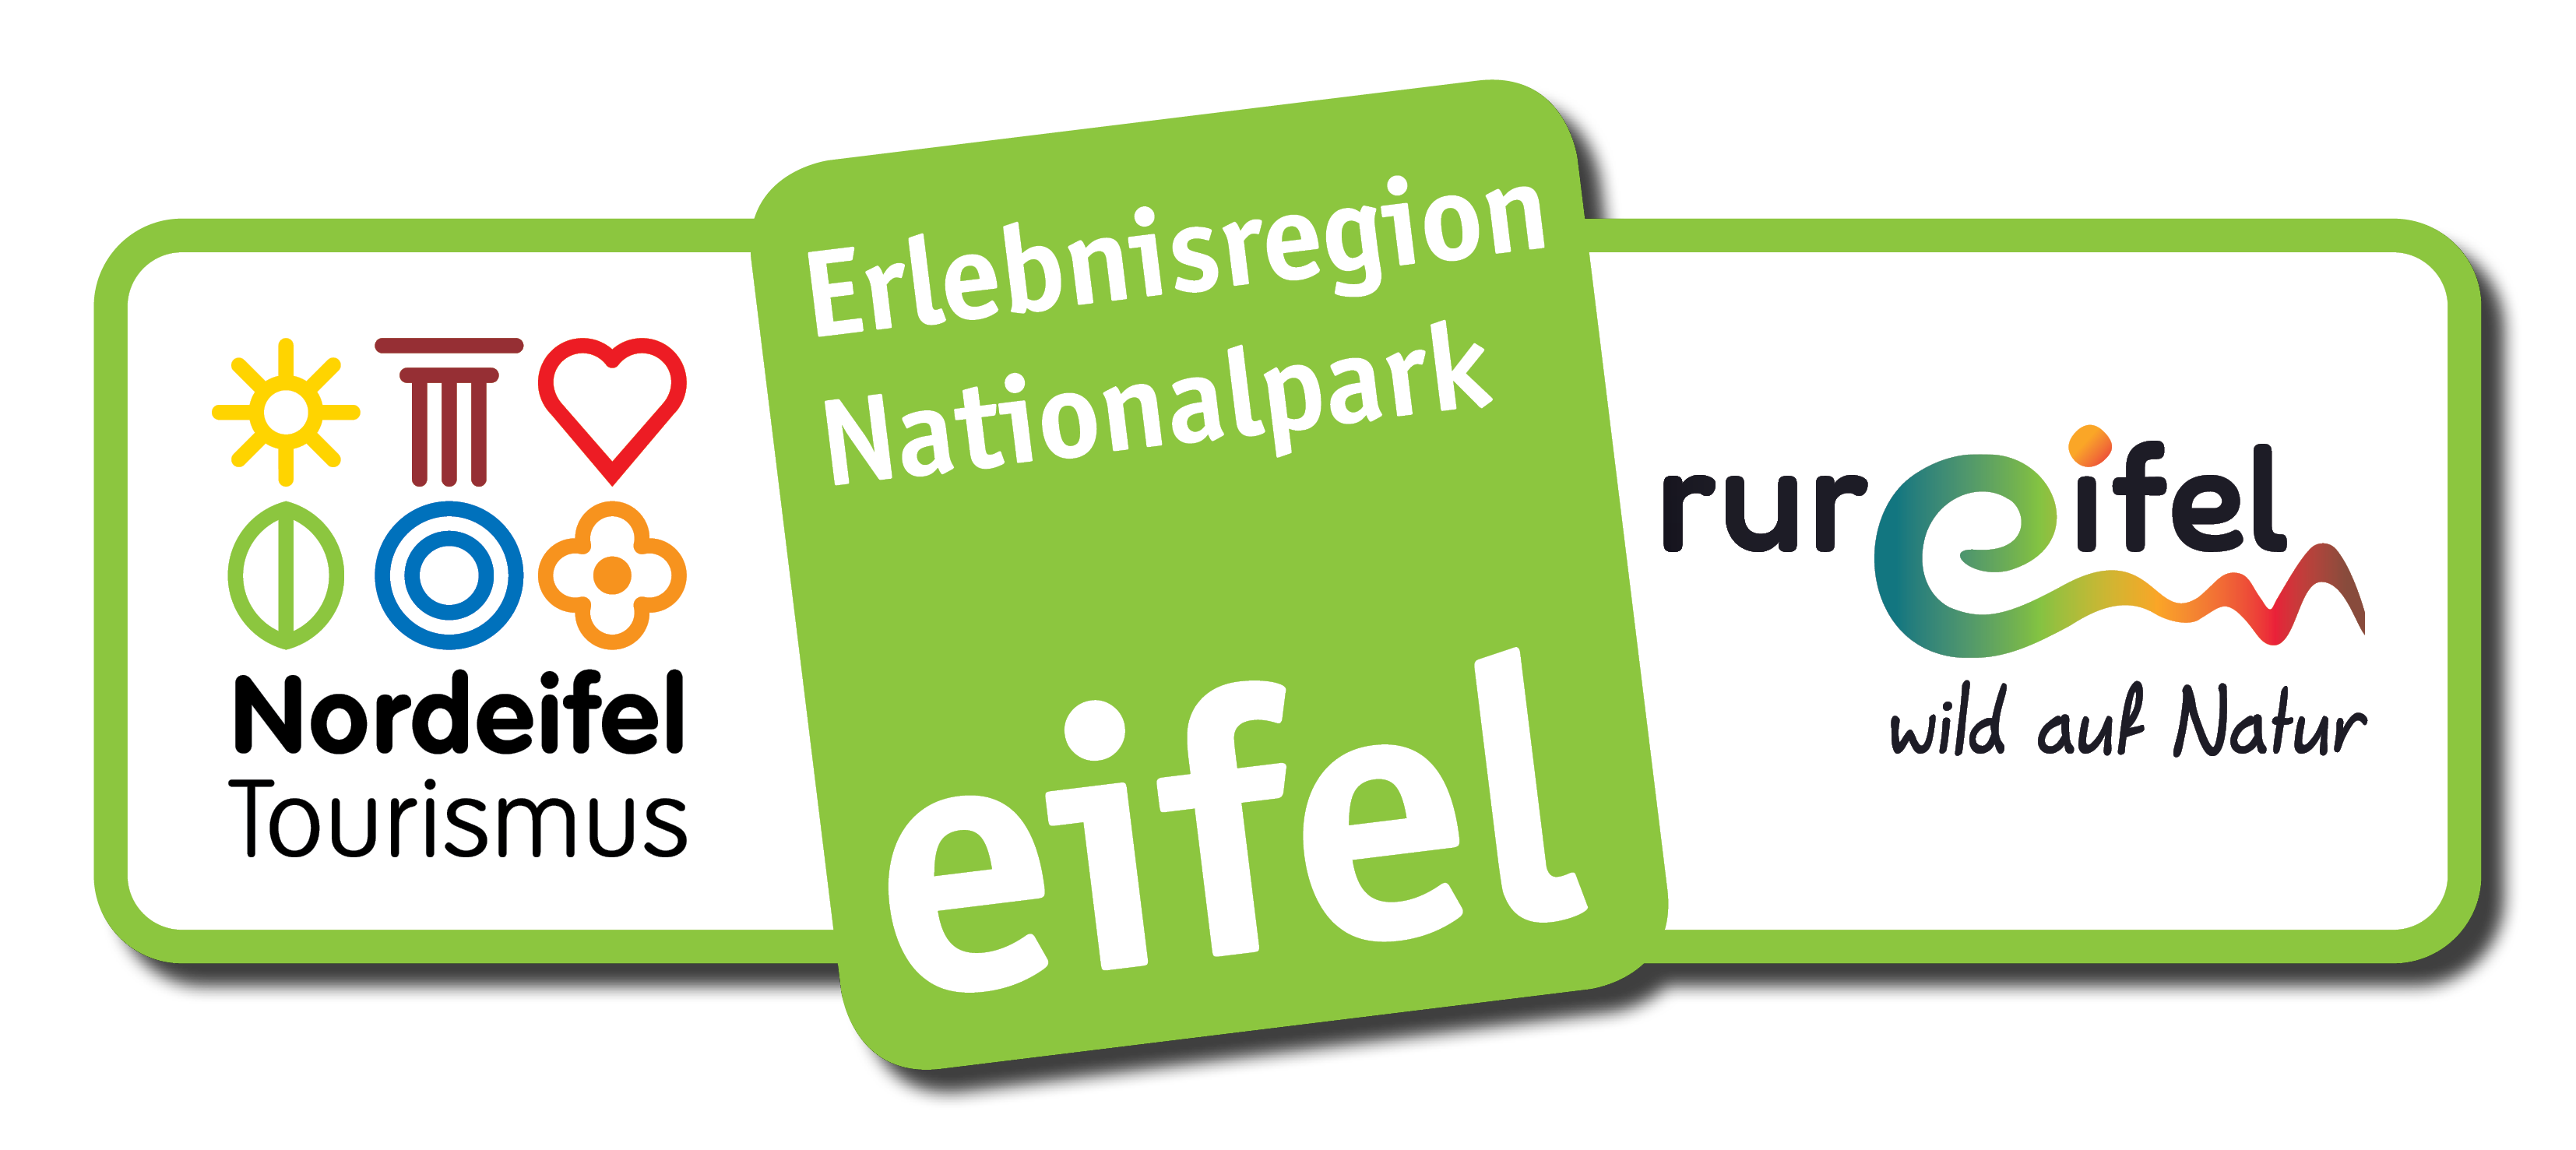 Erlebnisregion Nationalpark Eifel